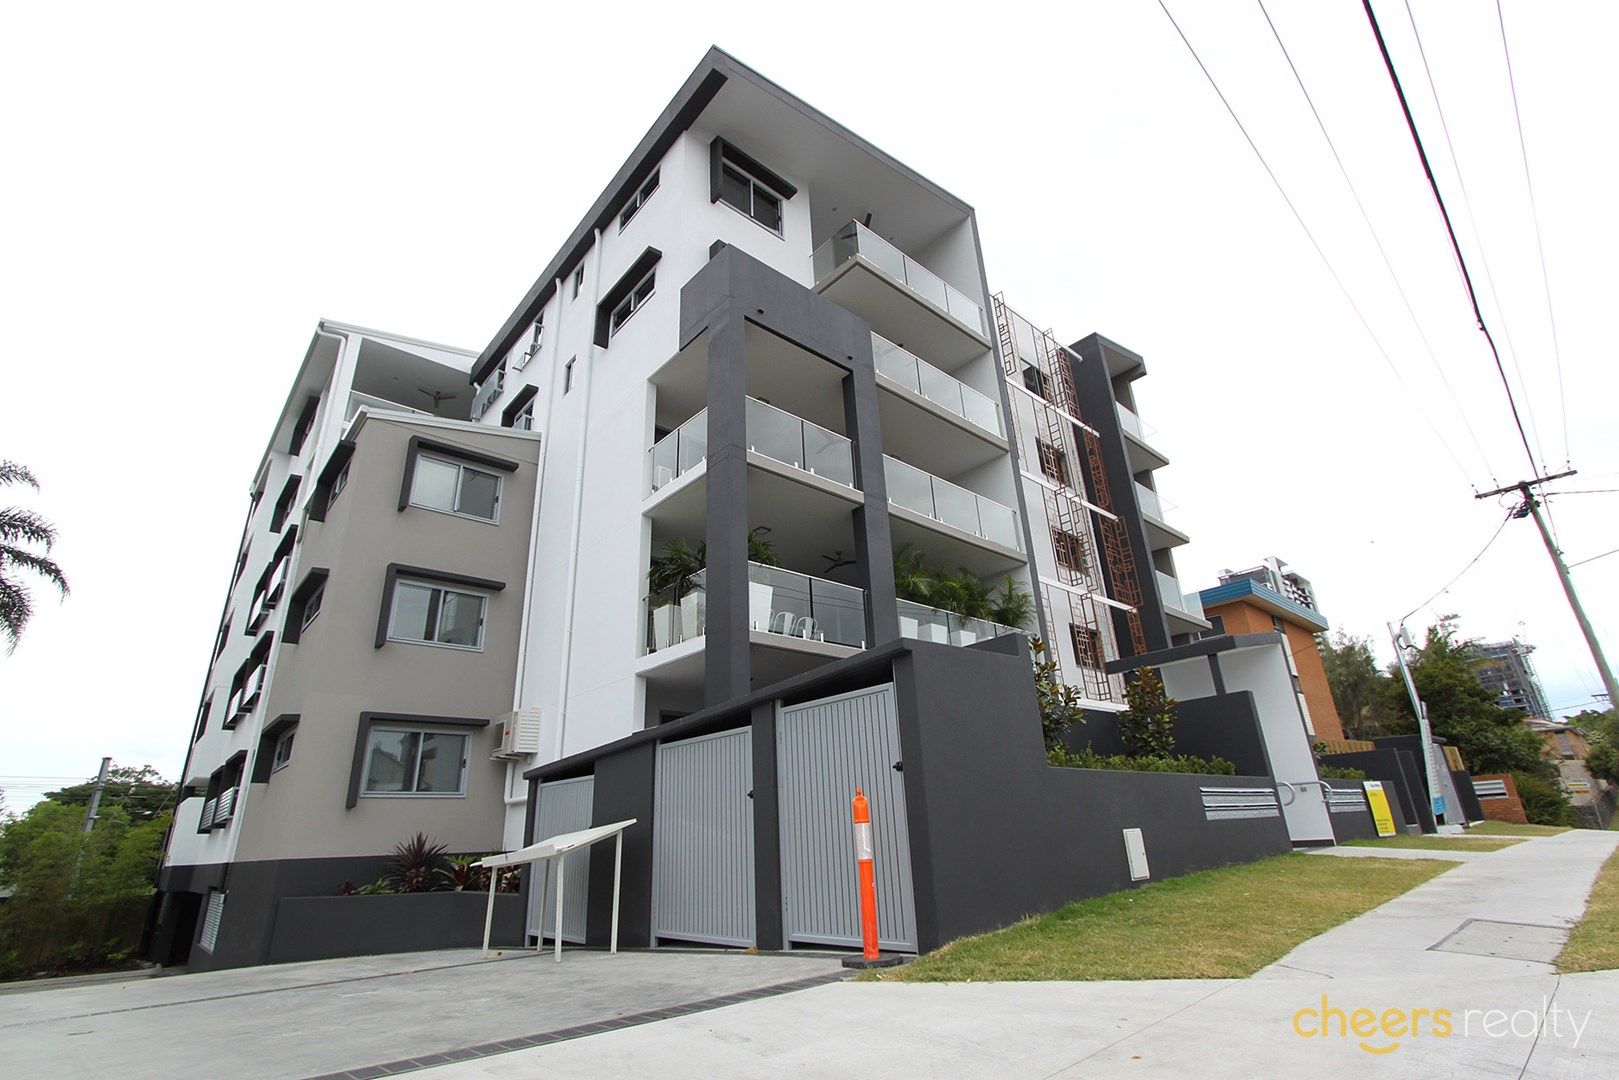 2 bedrooms Apartment / Unit / Flat in 18/29 Gordon street MILTON QLD, 4064